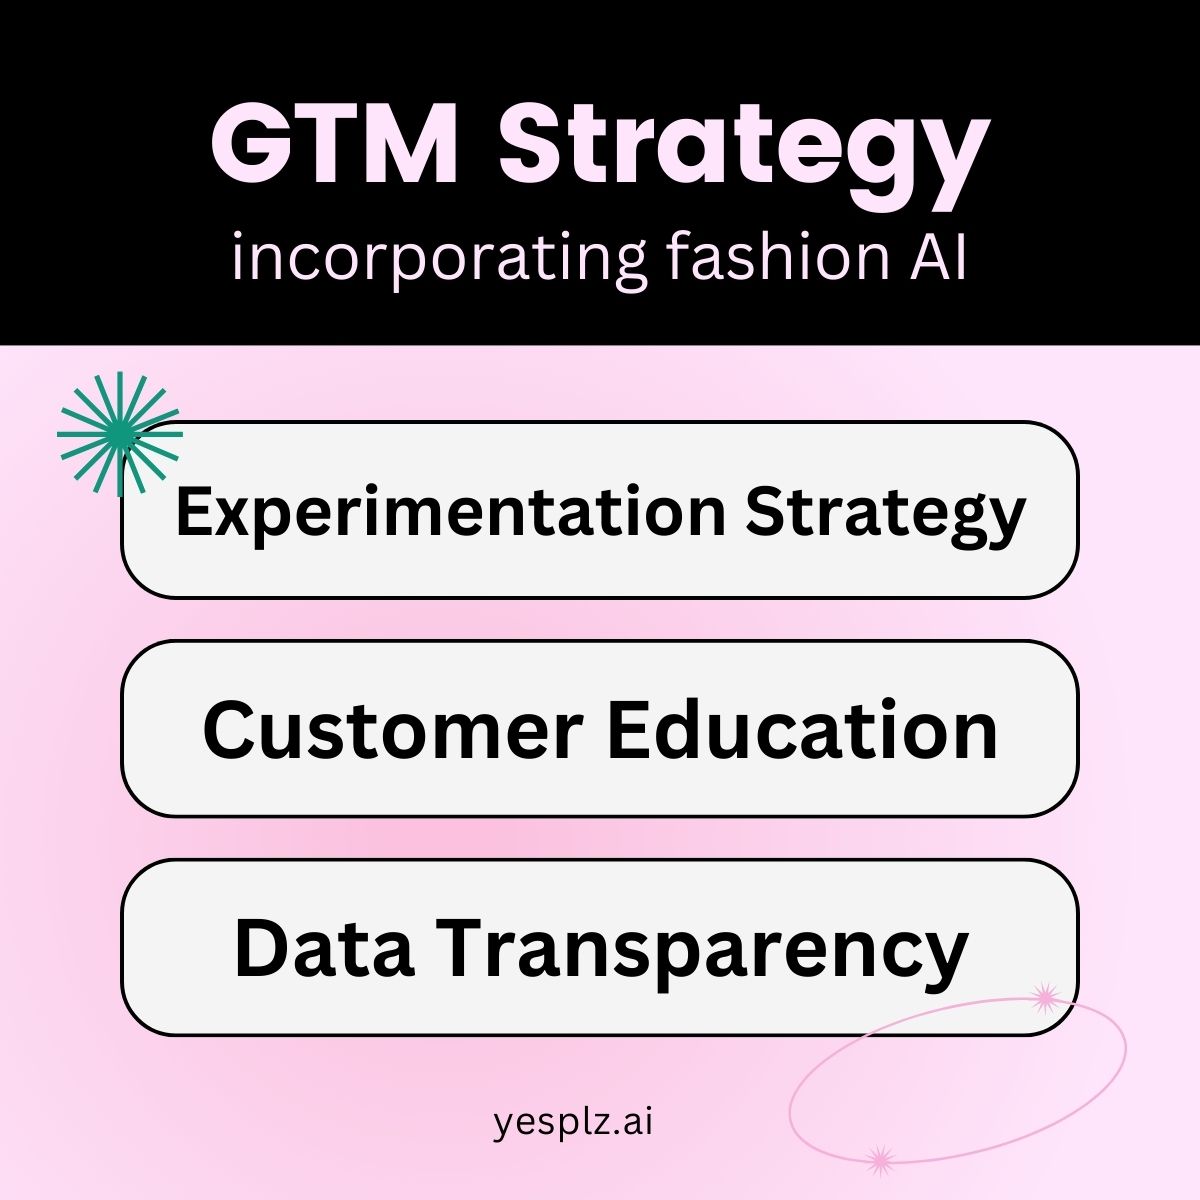 Go to market strategy for fashion AI